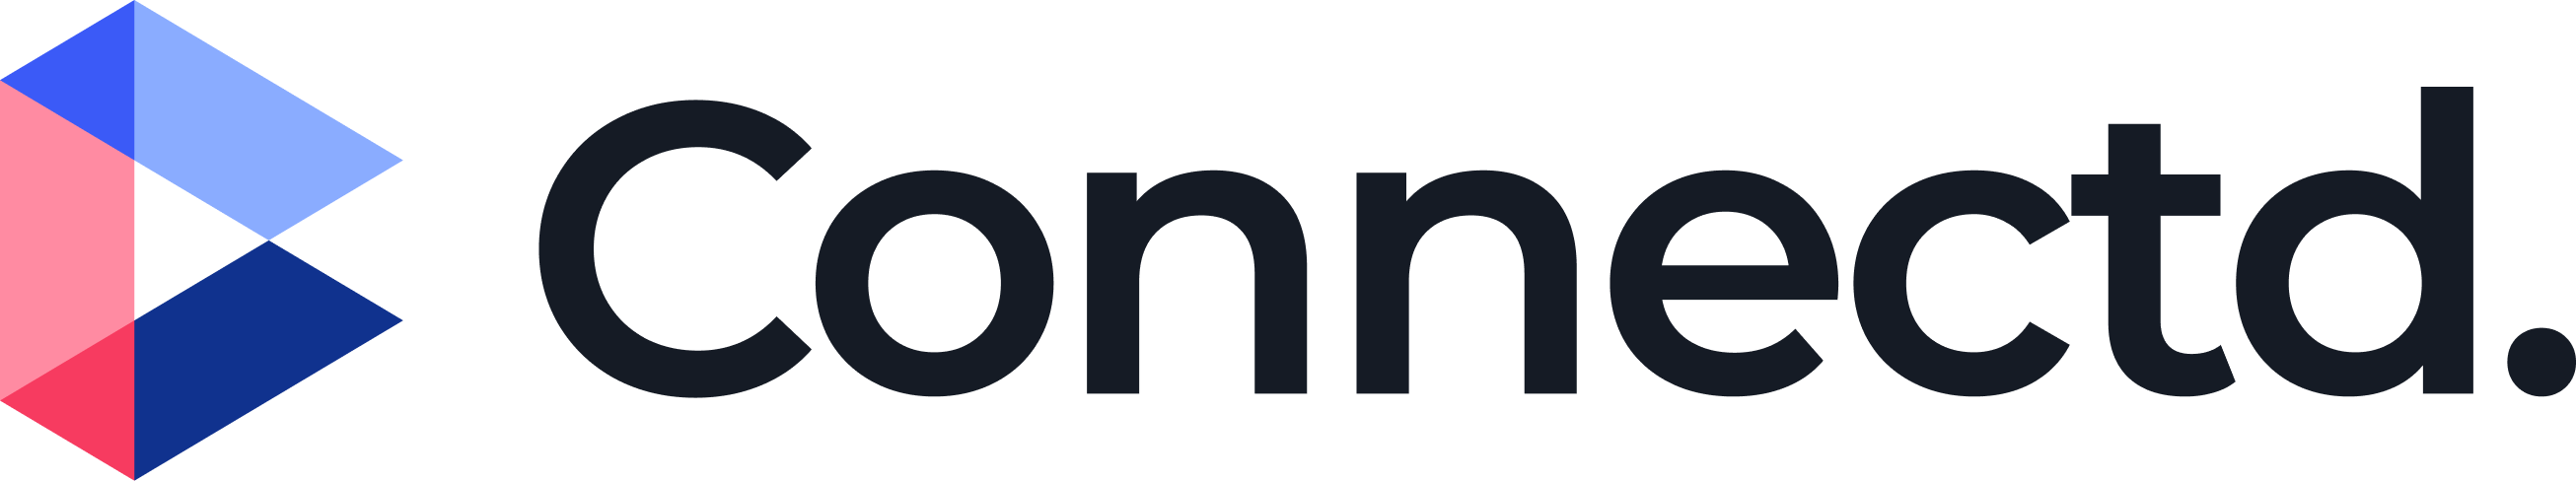 Connectd-Logo